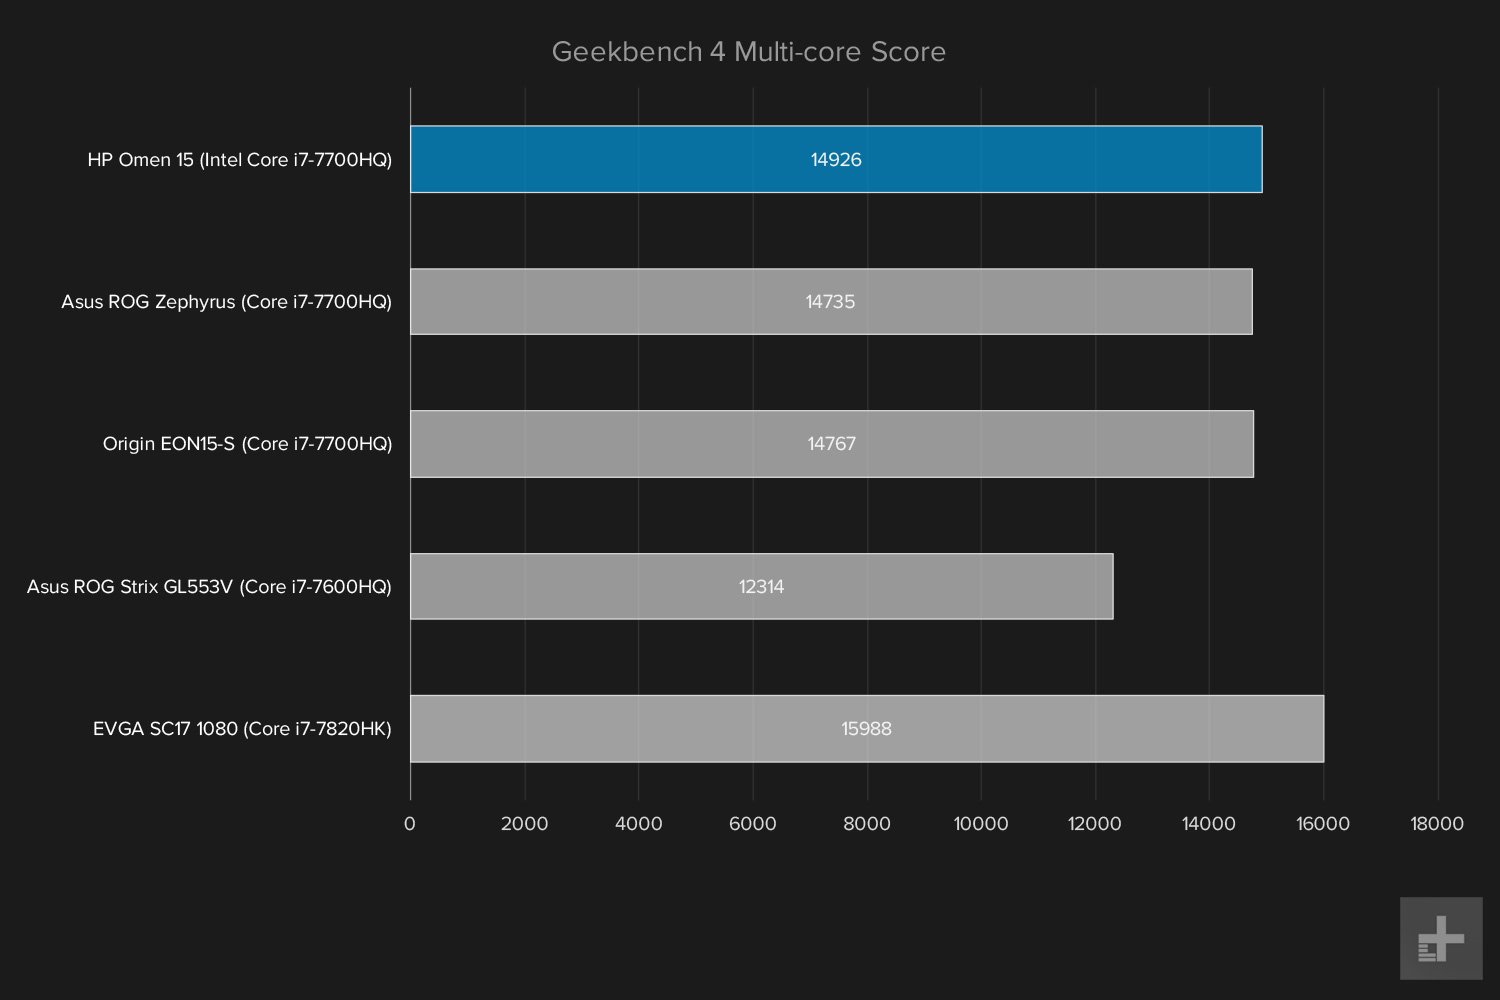 HP Omen benchmark graphs Geekbench Multi